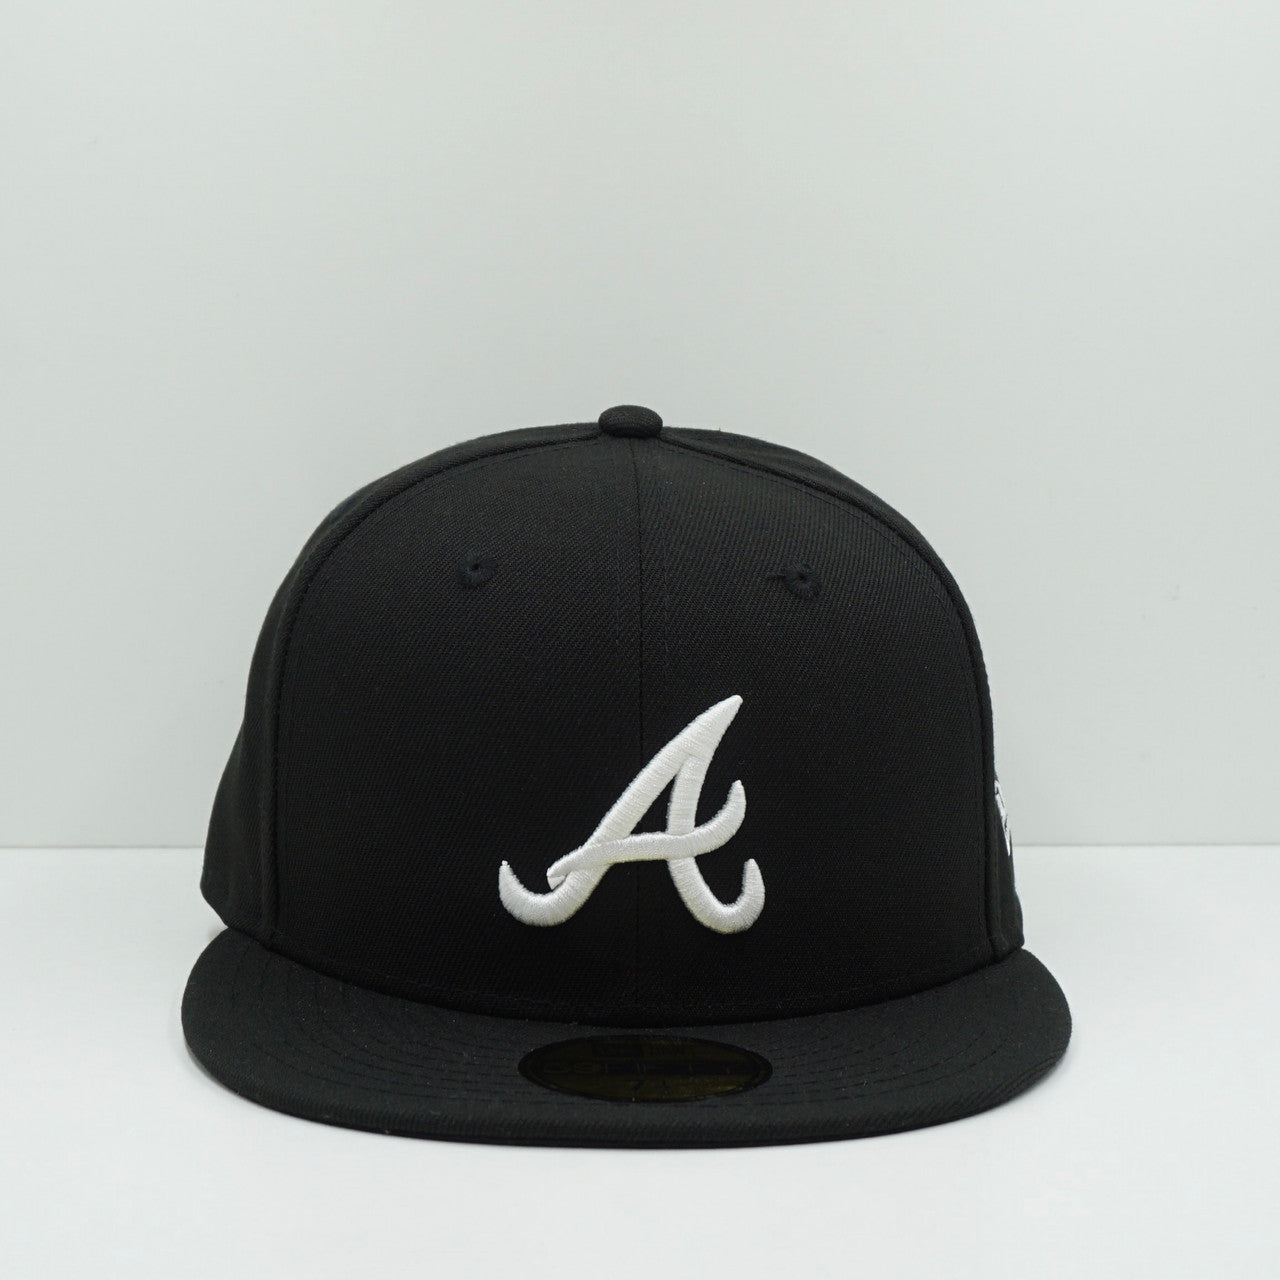 New Era Atlanta Braves Black/White Fitted Cap